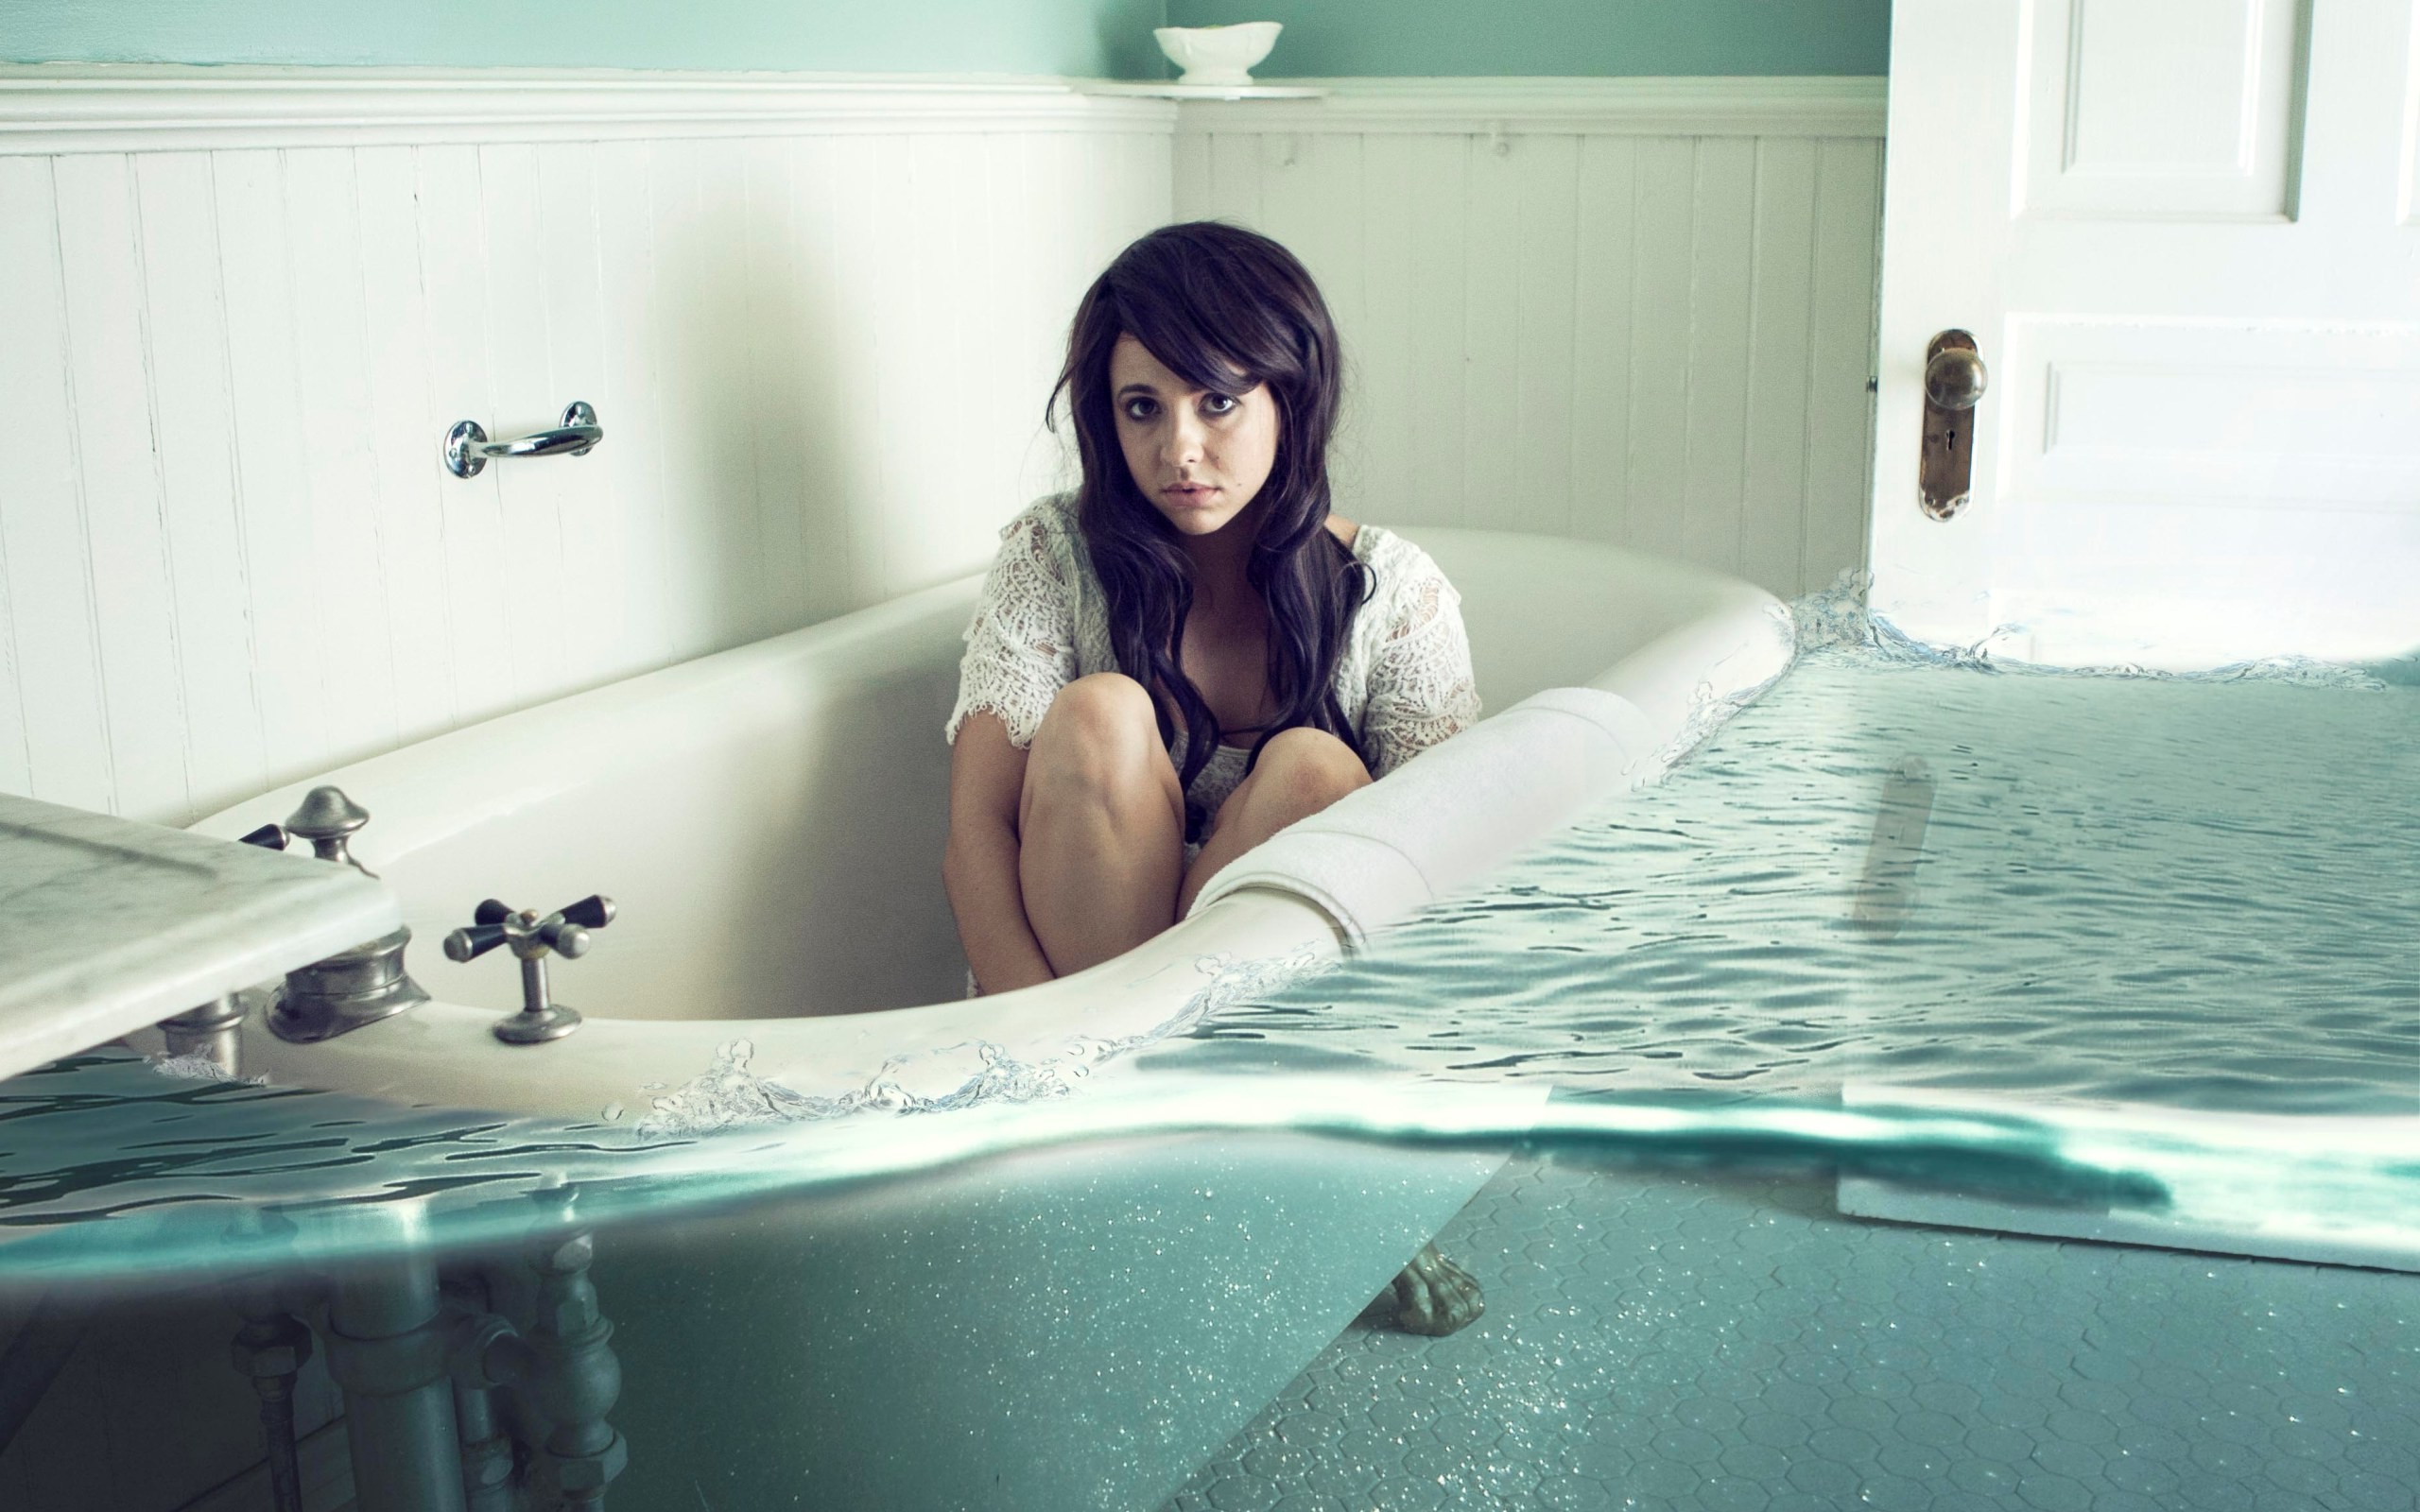 andrea strain add photo hot women in bathtub